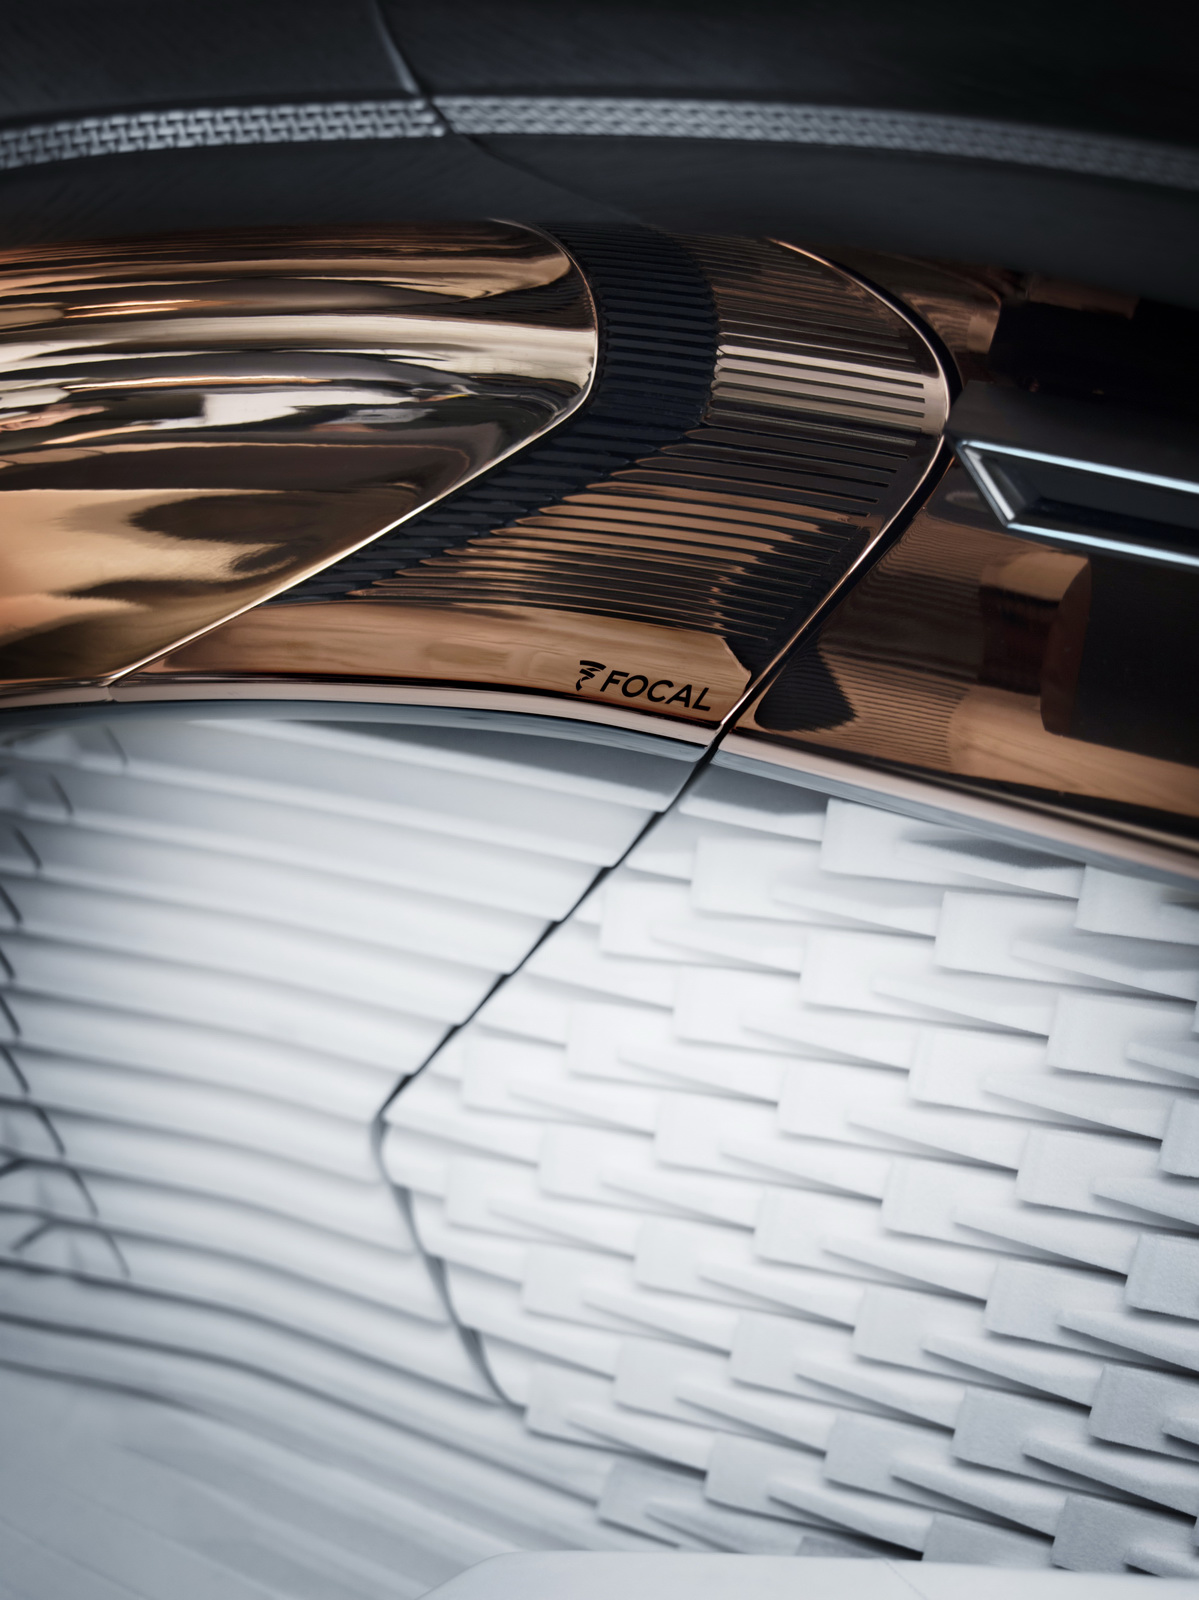 Peugeot Fractal Concept, 2015 - Interior